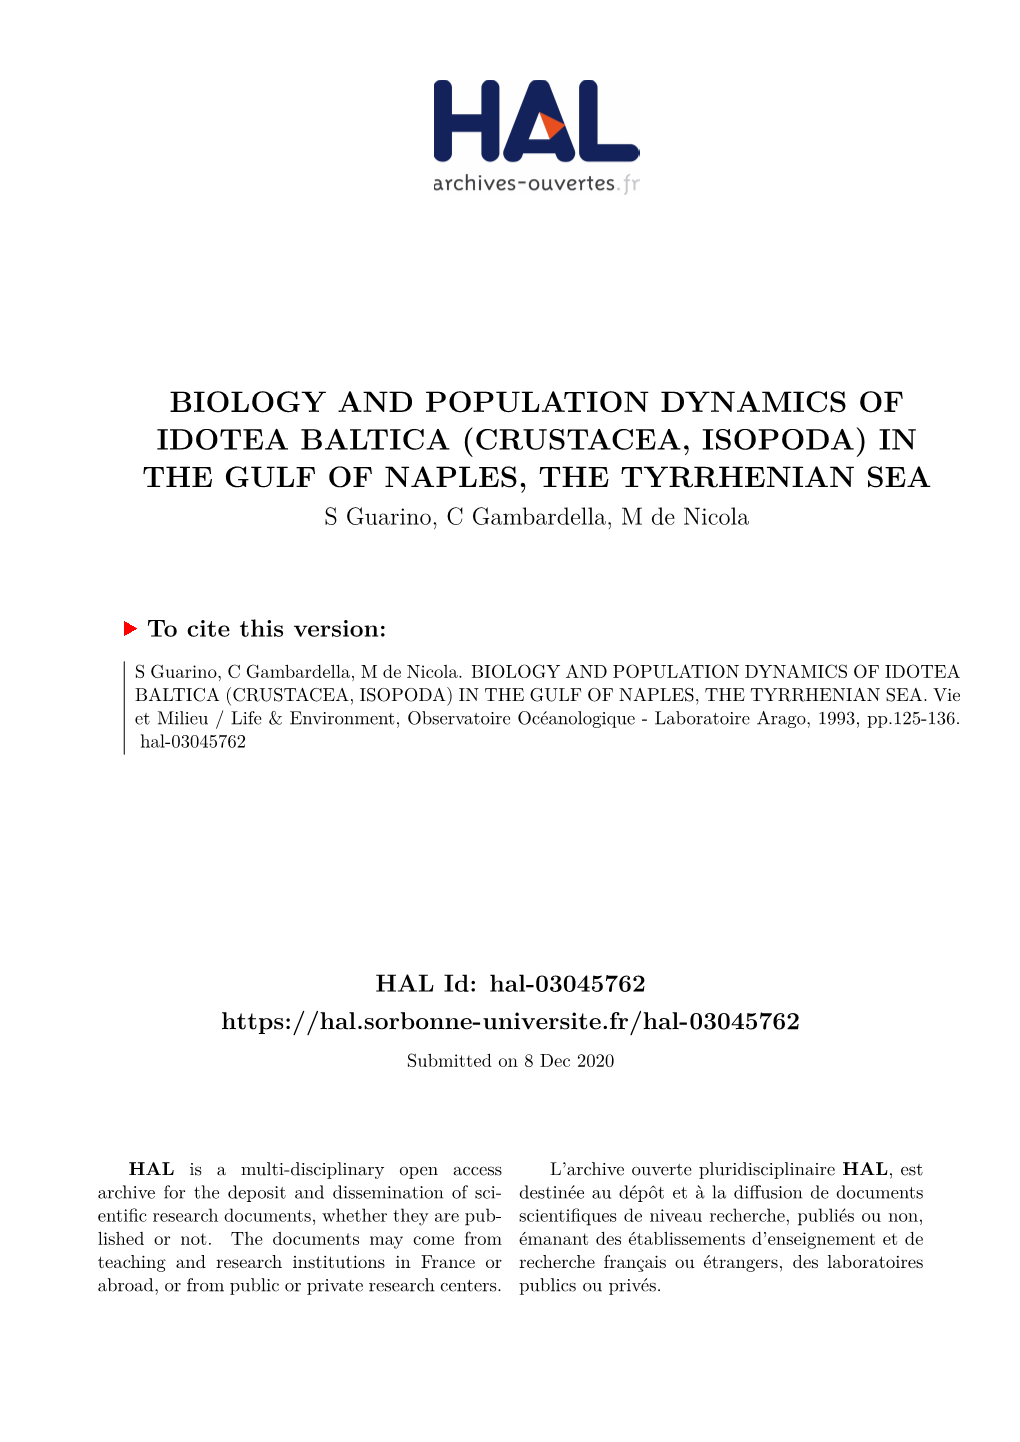 BIOLOGY and POPULATION DYNAMICS of IDOTEA BALTICA (CRUSTACEA, ISOPODA) in the GULF of NAPLES, the TYRRHENIAN SEA S Guarino, C Gambardella, M De Nicola